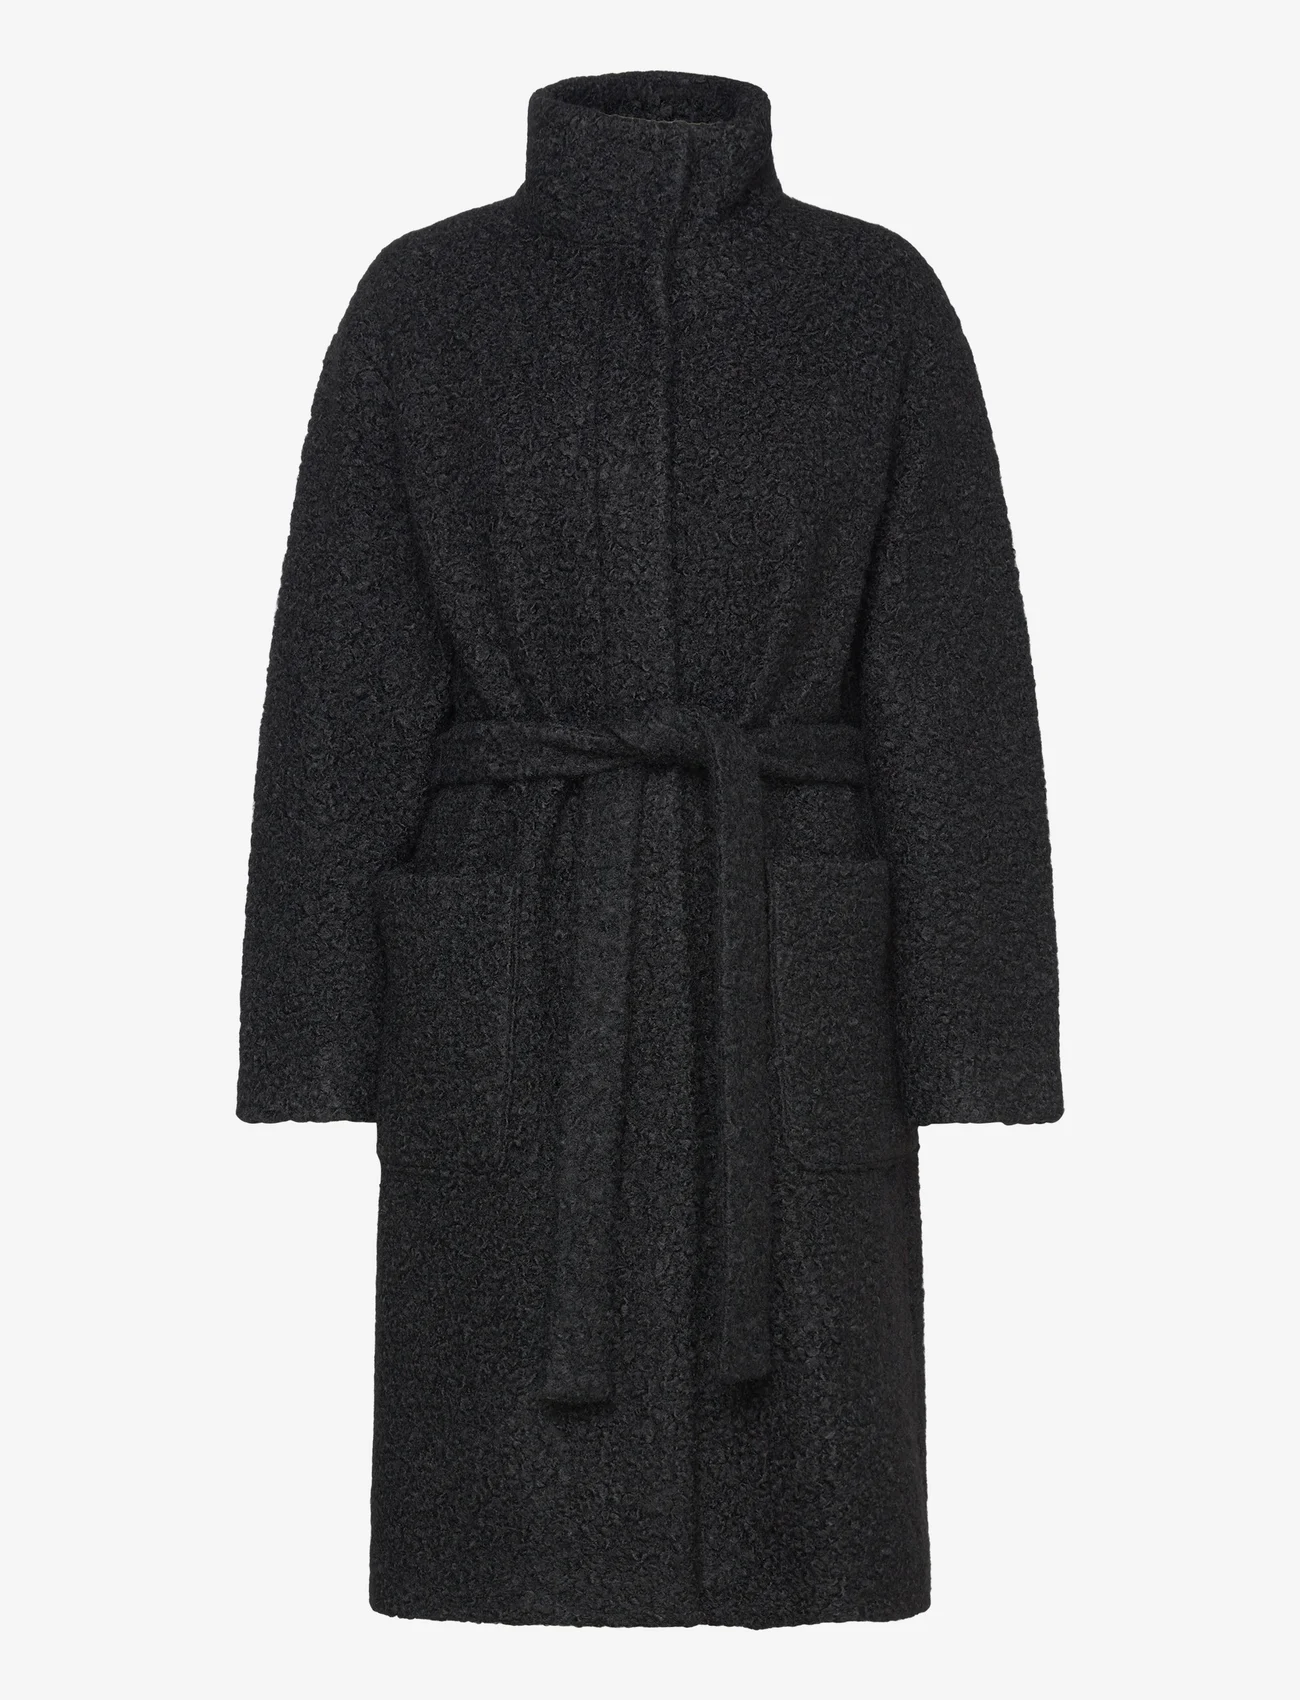 BOSS - C_Caylon - winter coats - black - 0